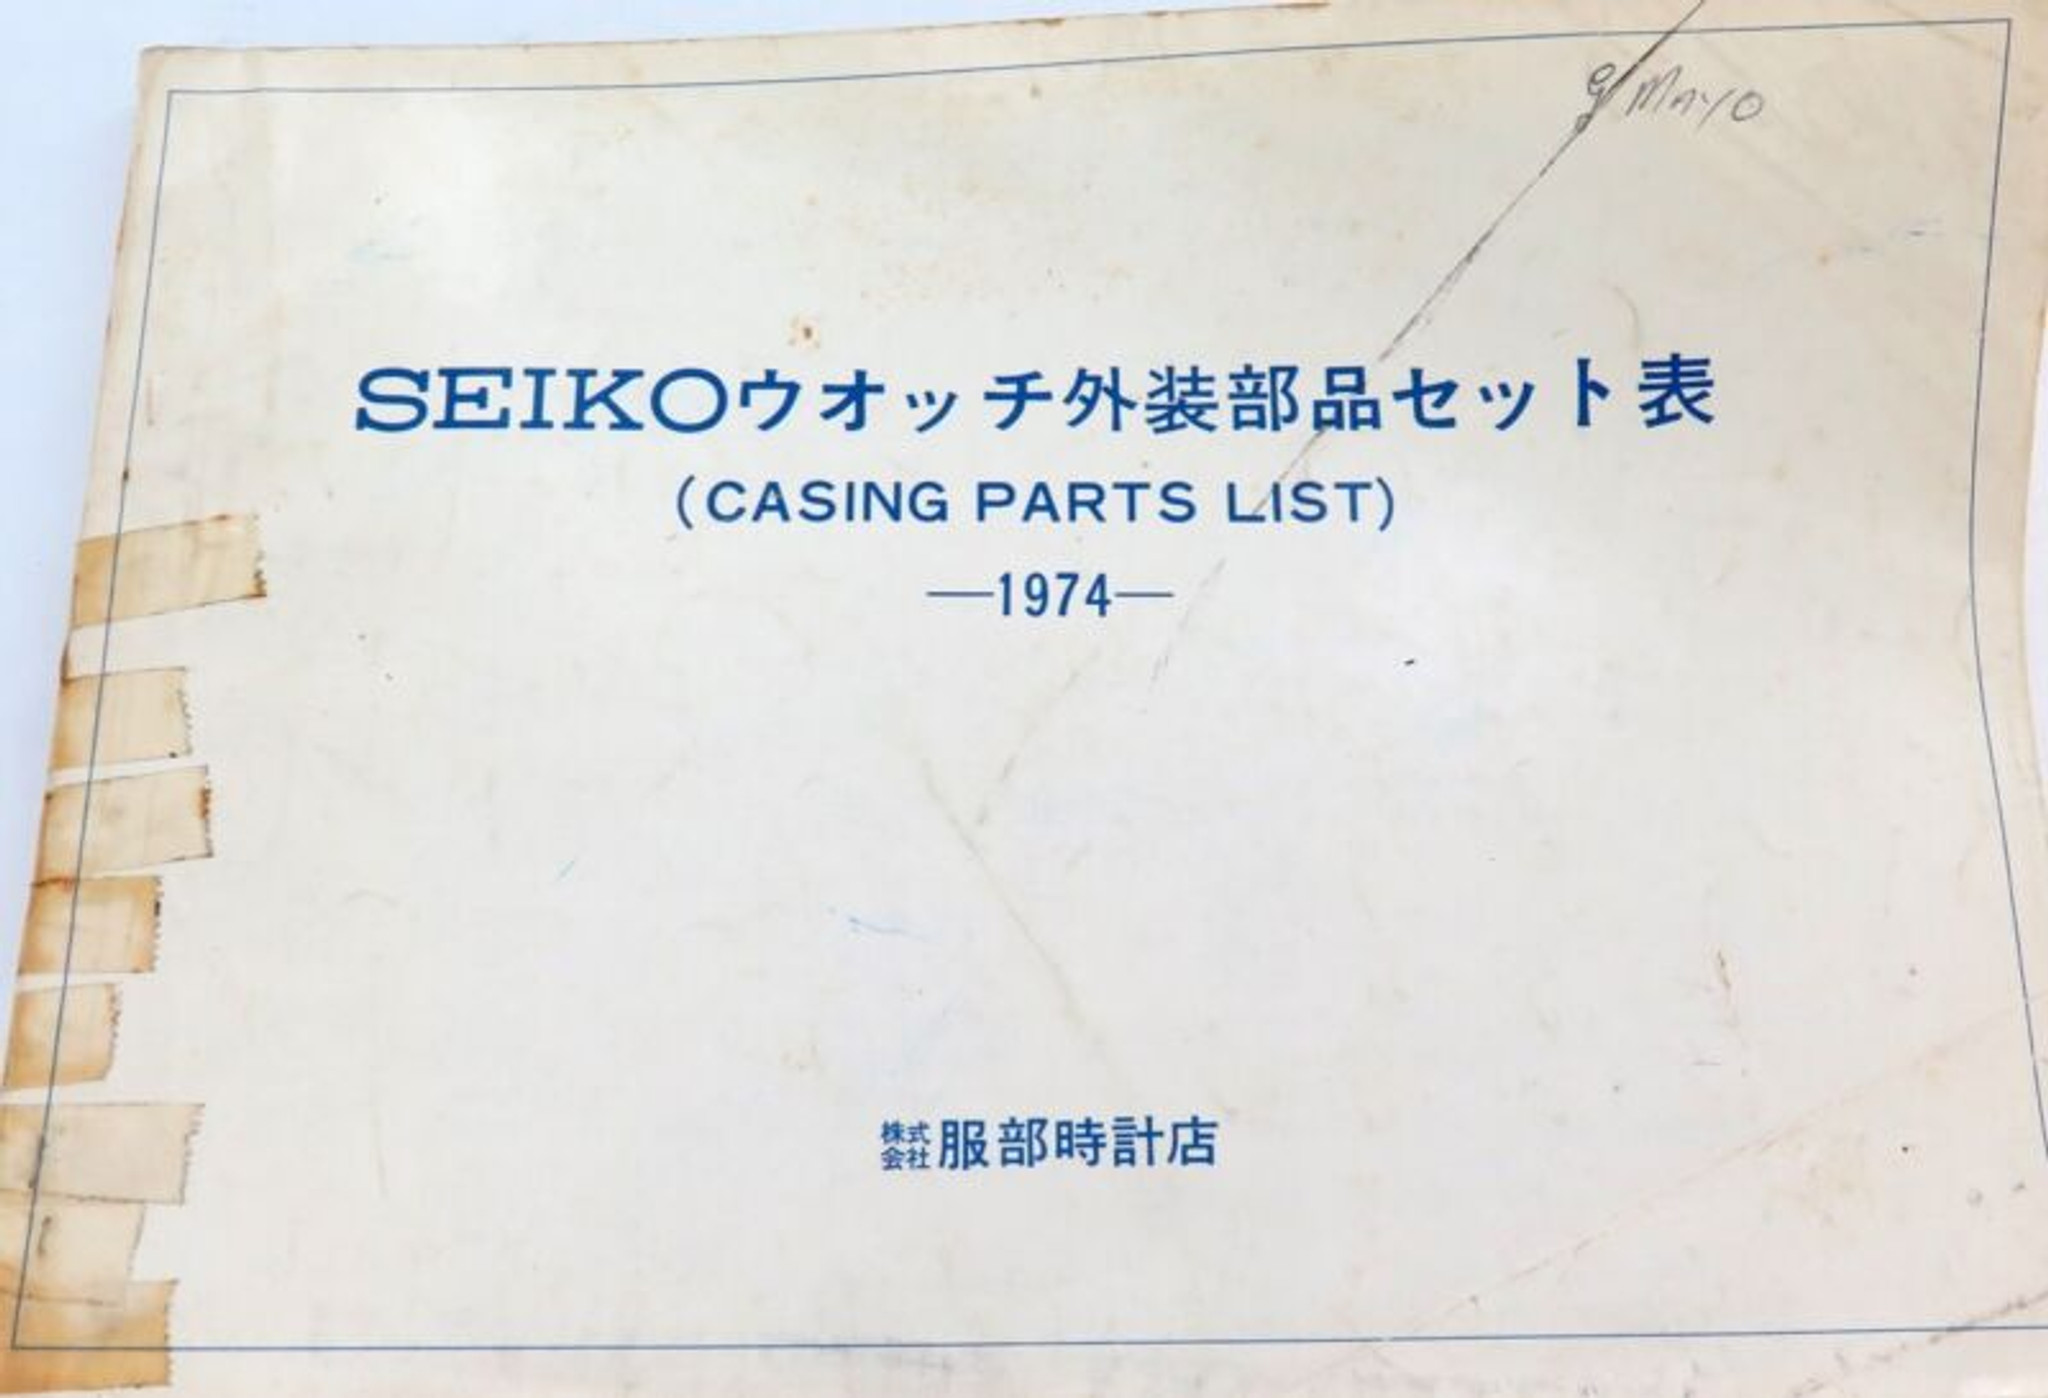 Scarce Seiko 1974 Casing Parts List in English & Japanese - Harrington & Co.